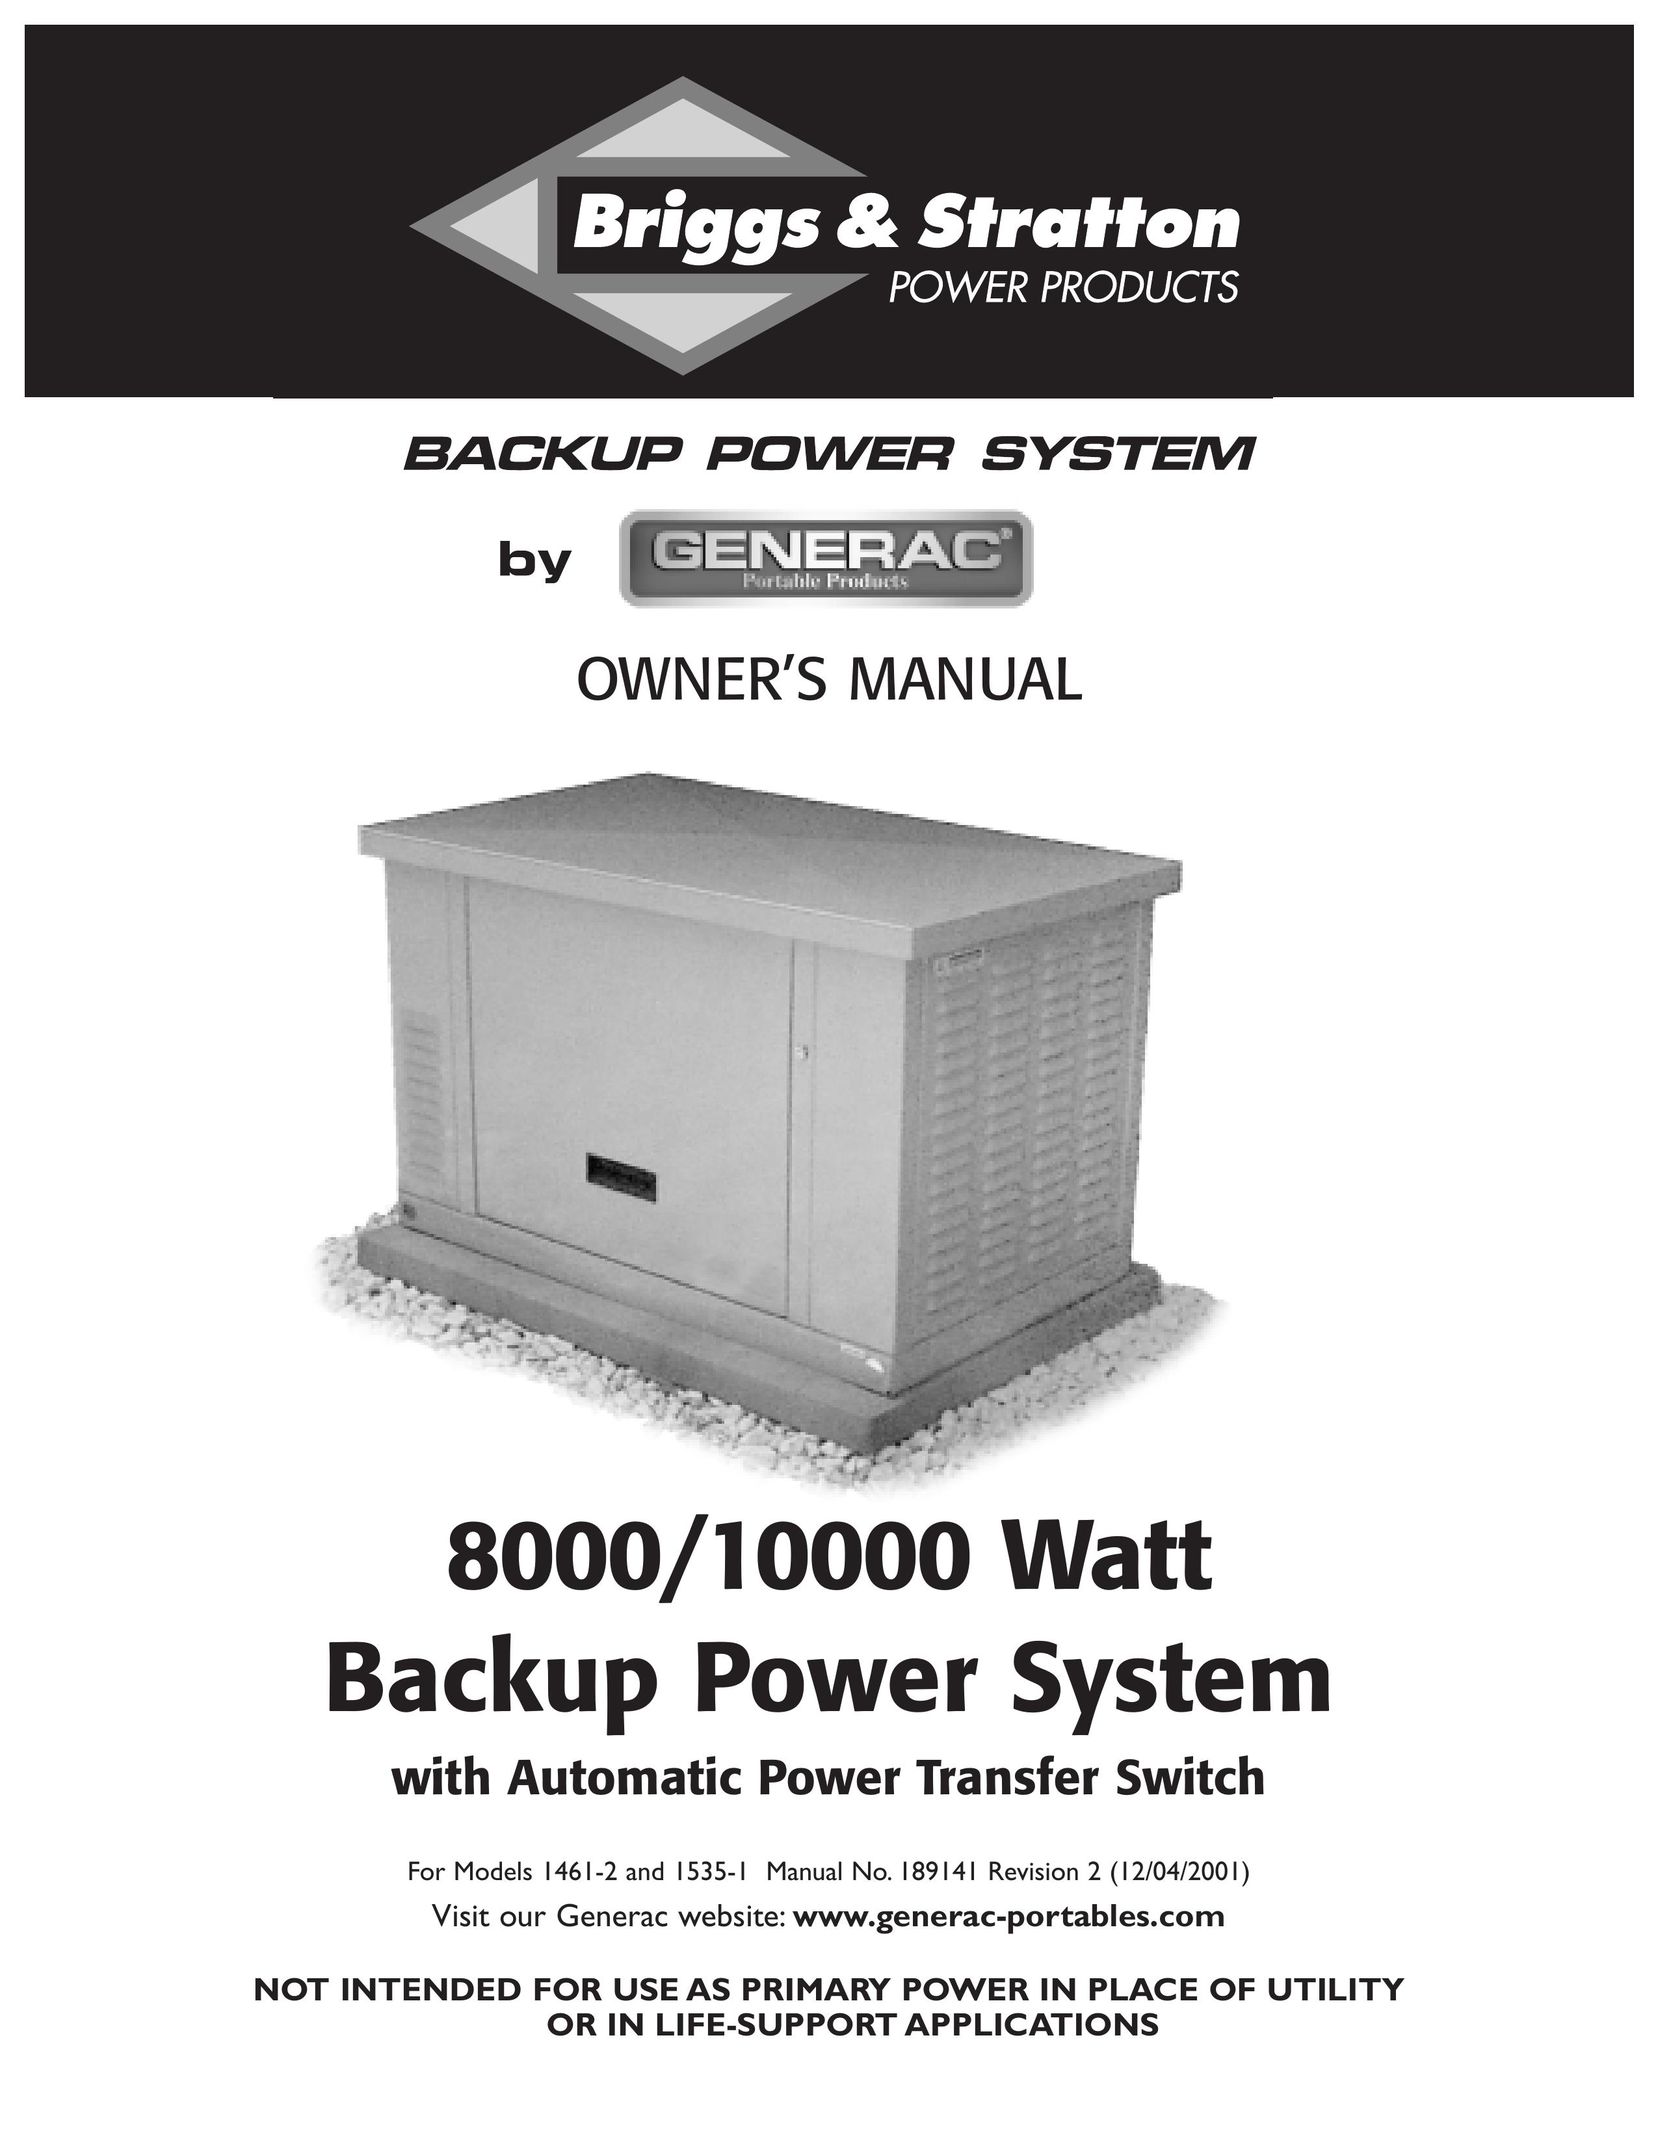 Briggs & Stratton 1535-1 Power Supply User Manual